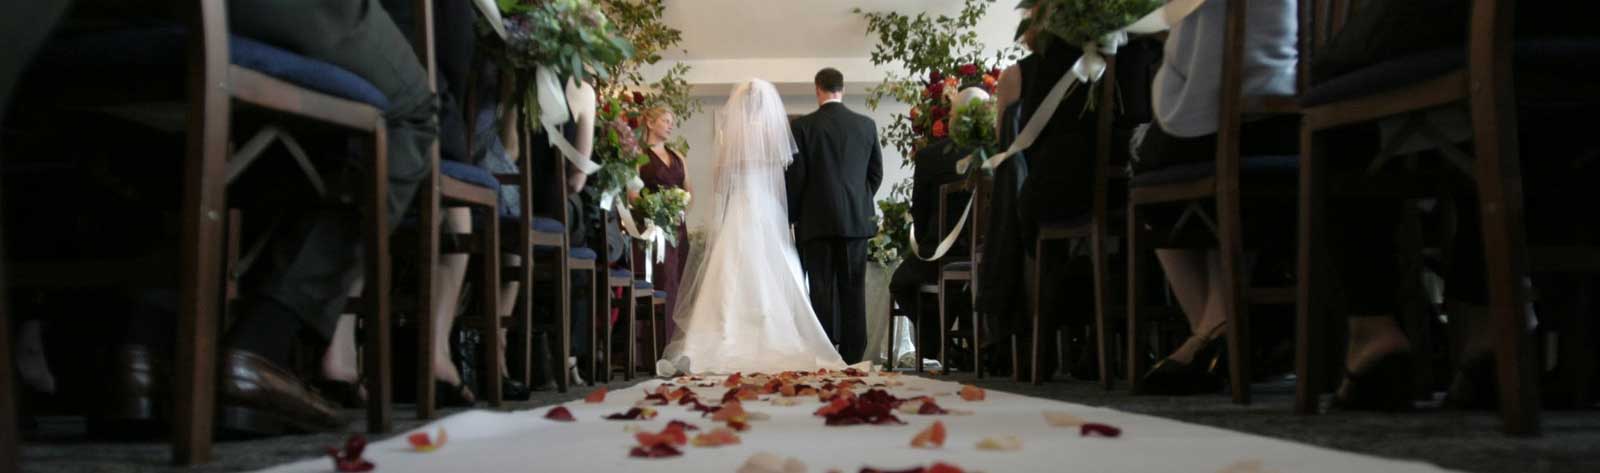 California Wedding Planning Services